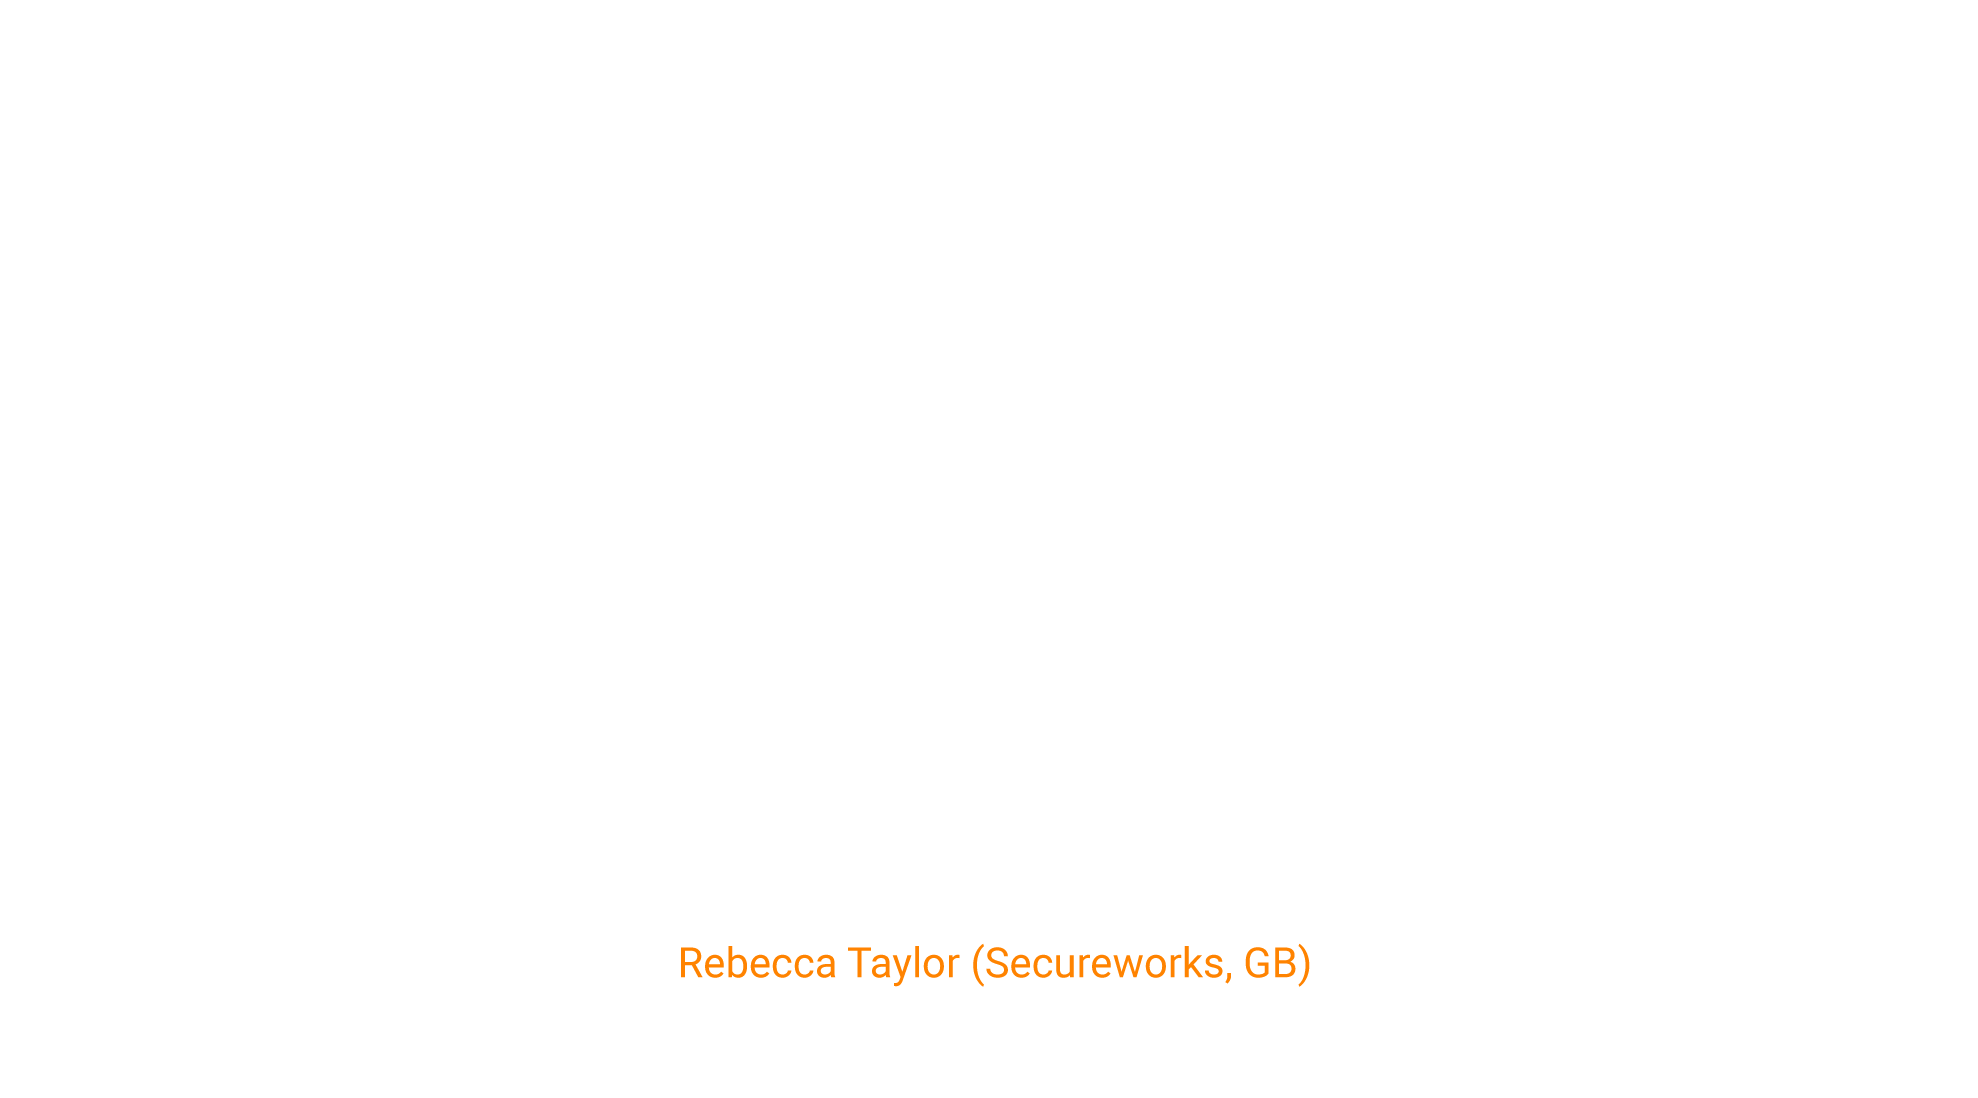 Knowledge Management - Nourishing and Enhancing Your Communication and Intelligence